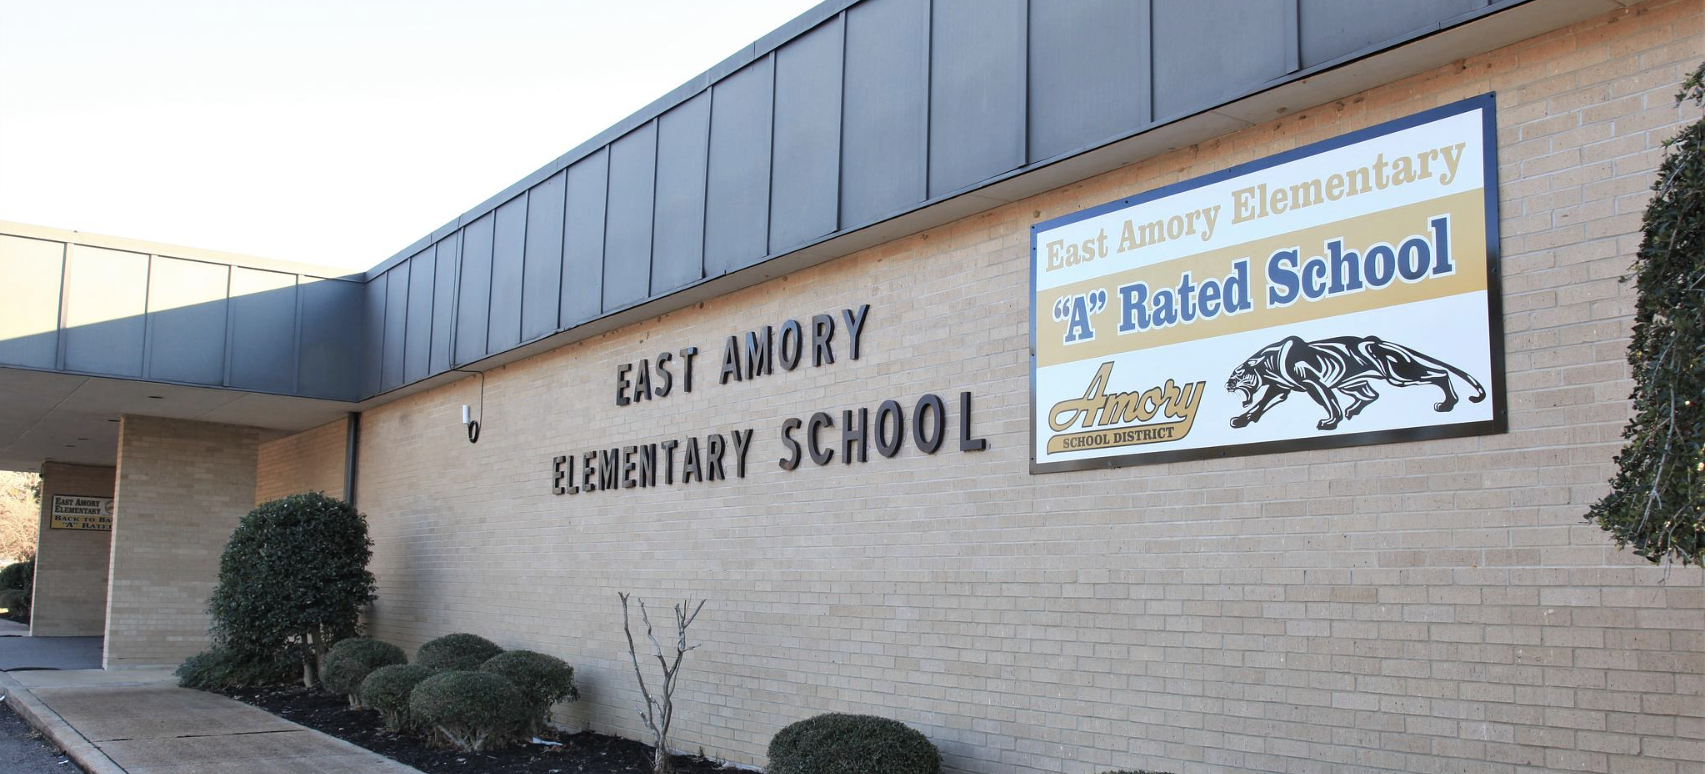 East Amory Elementary School